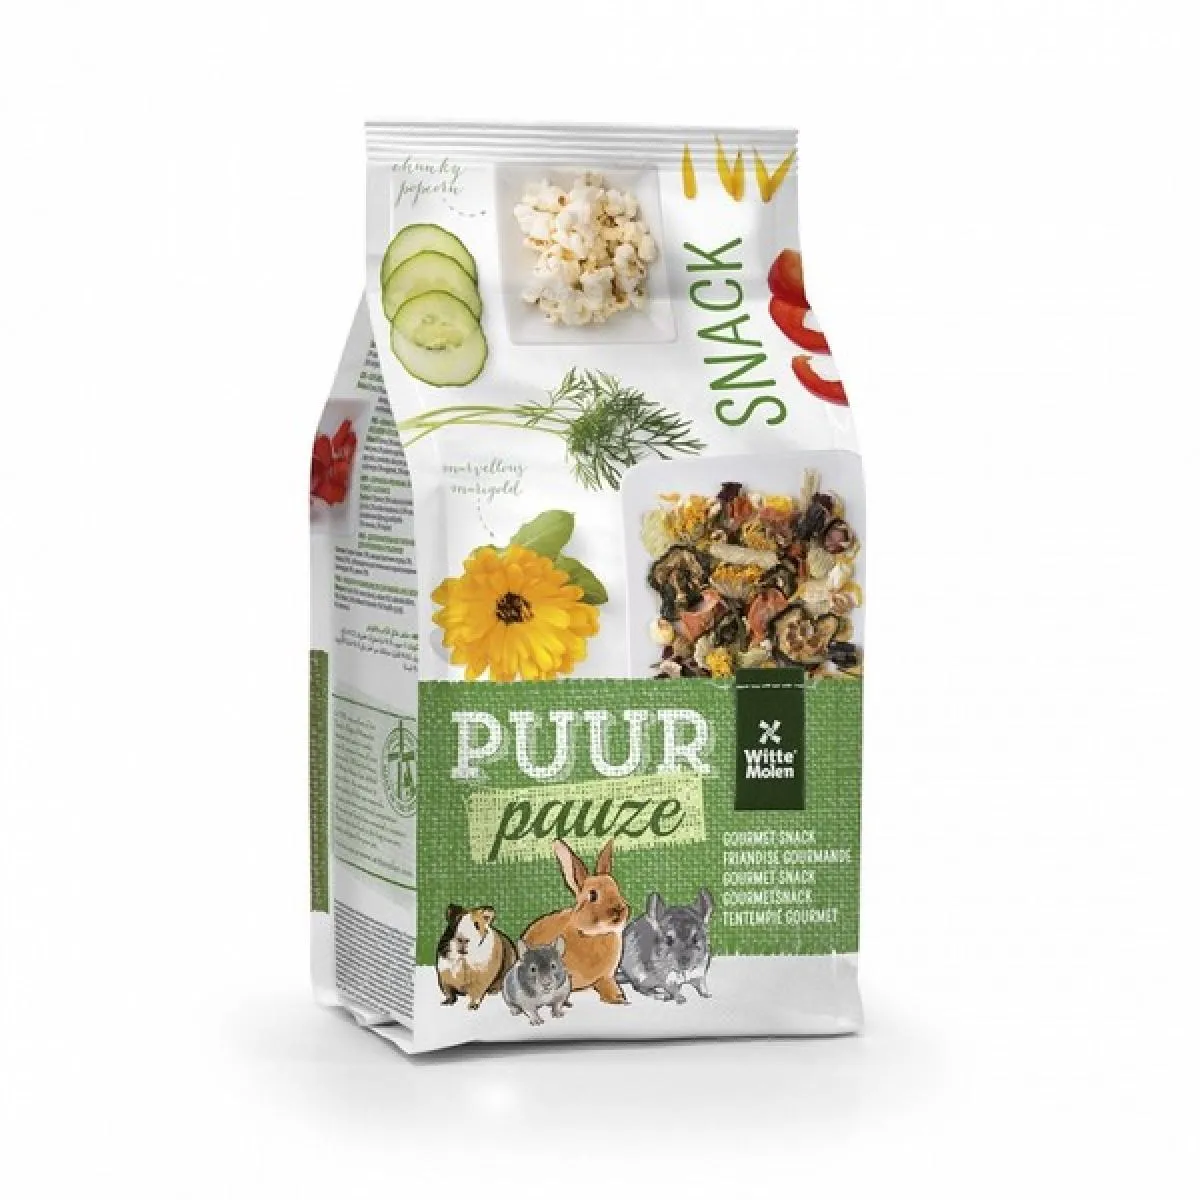 Witte Molen Puur Pauze Snack Muesli -Допълнителна храна за гризачи 7 кг.